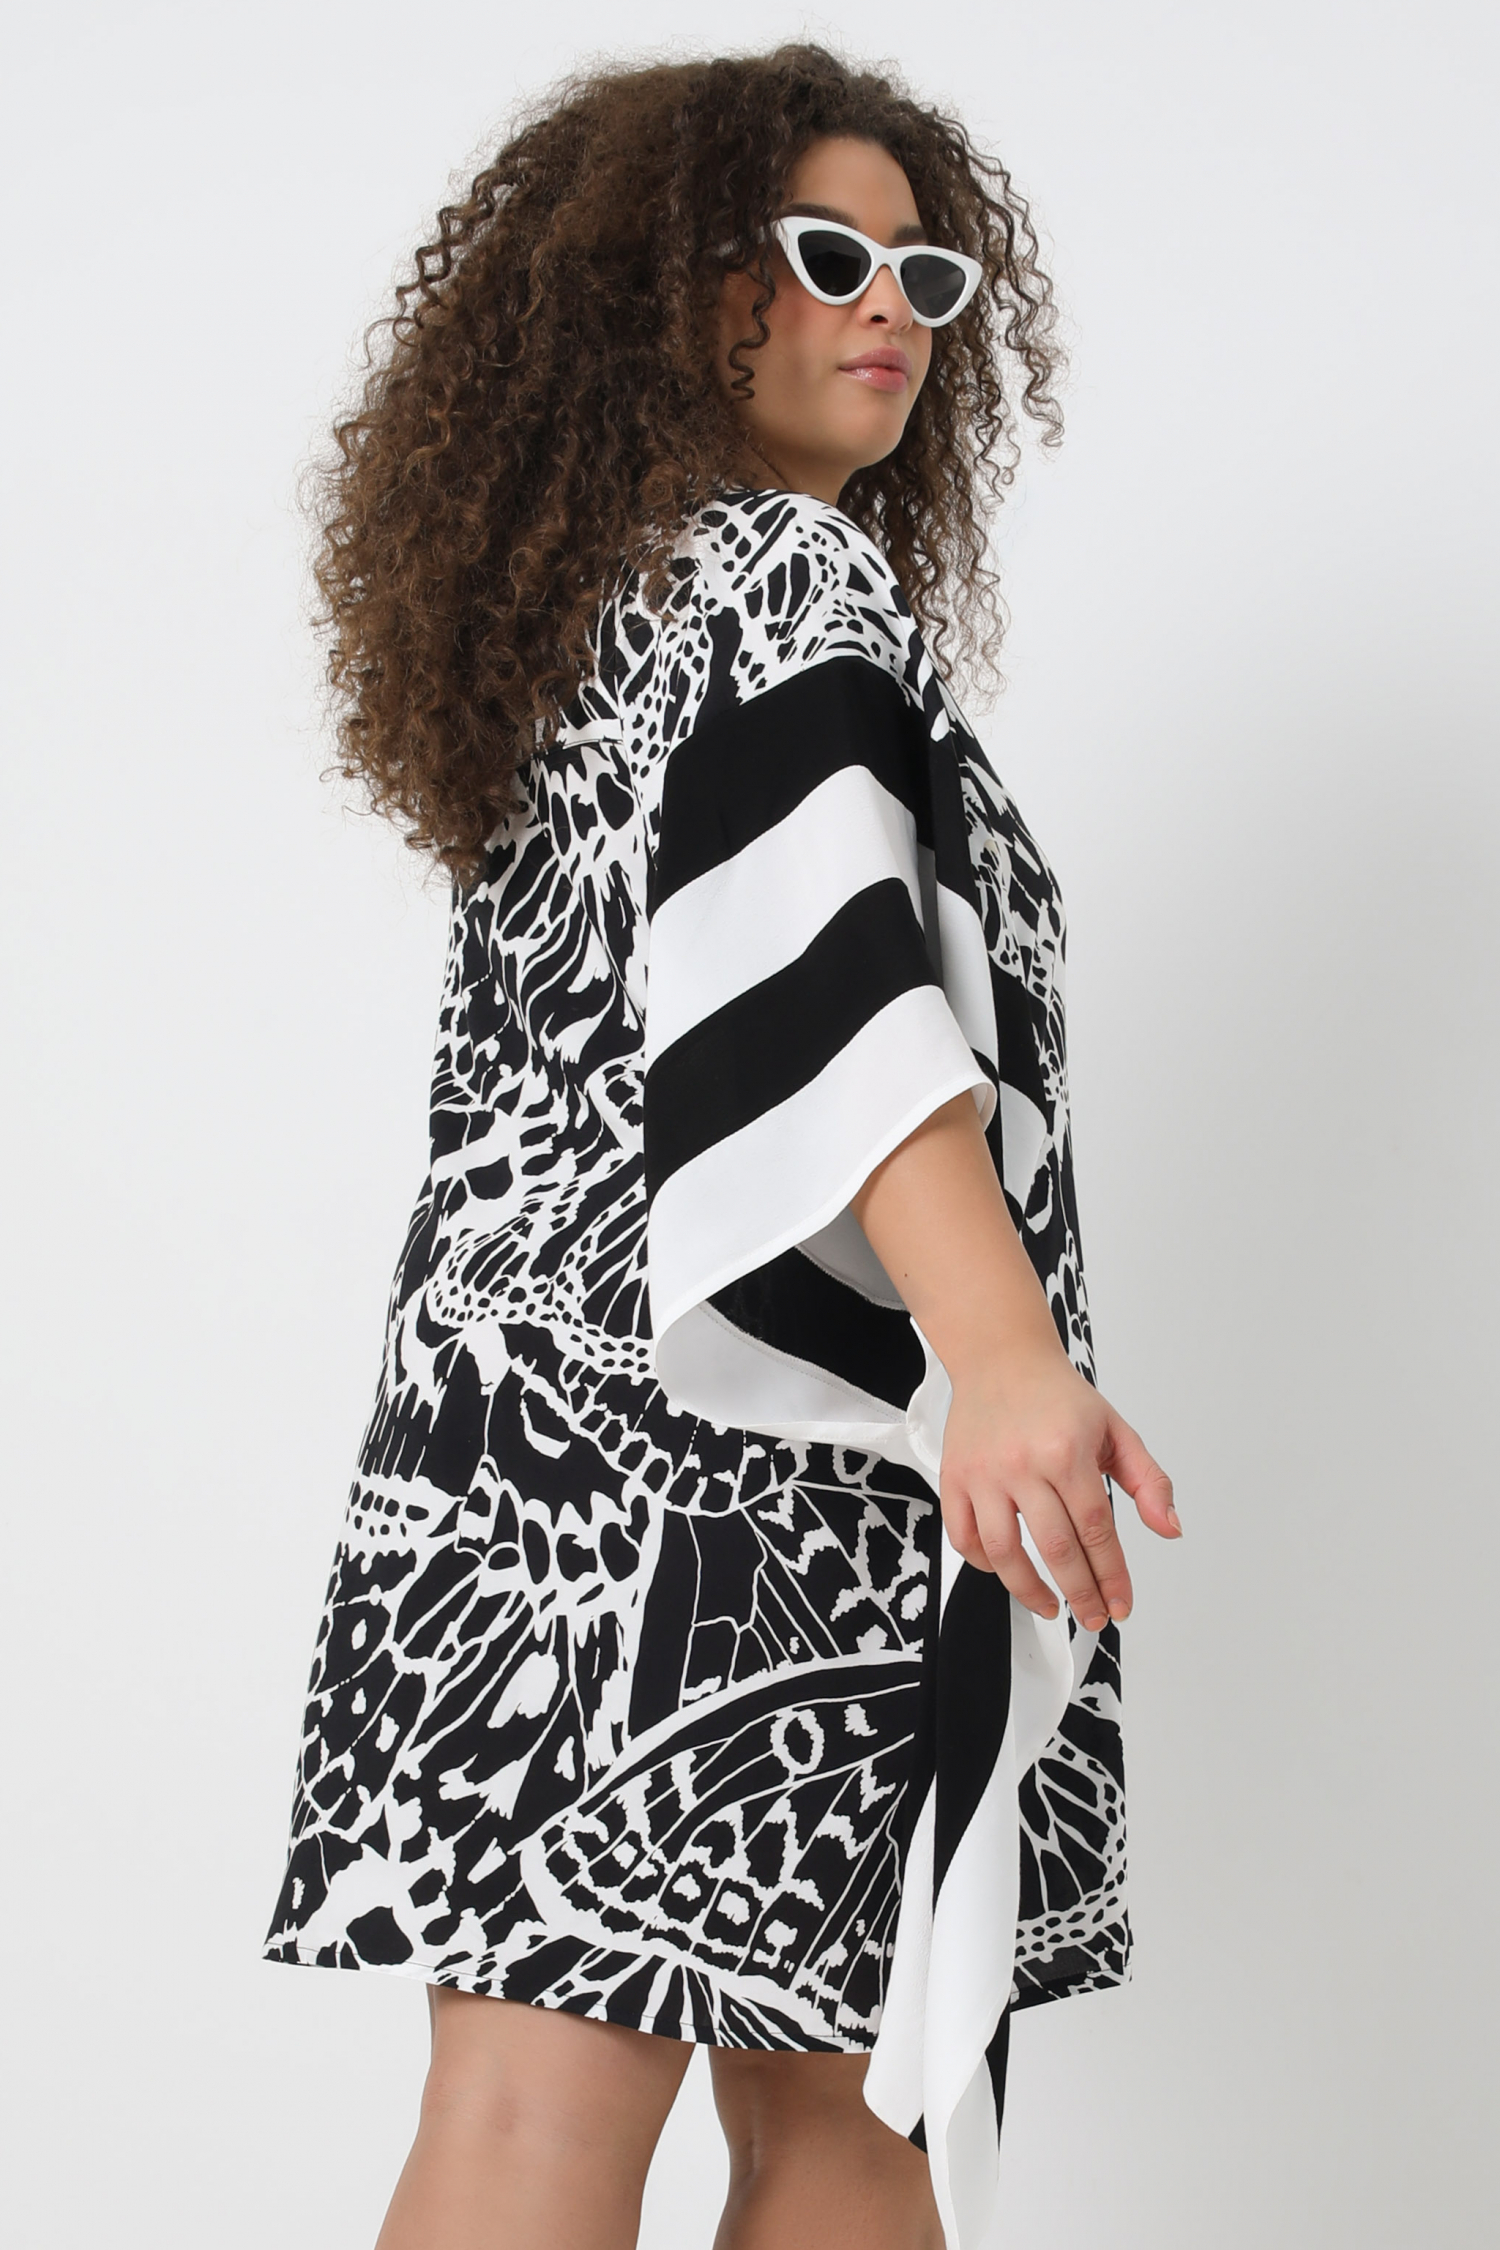 Oversized black and white print dress (shipping January 25/31)